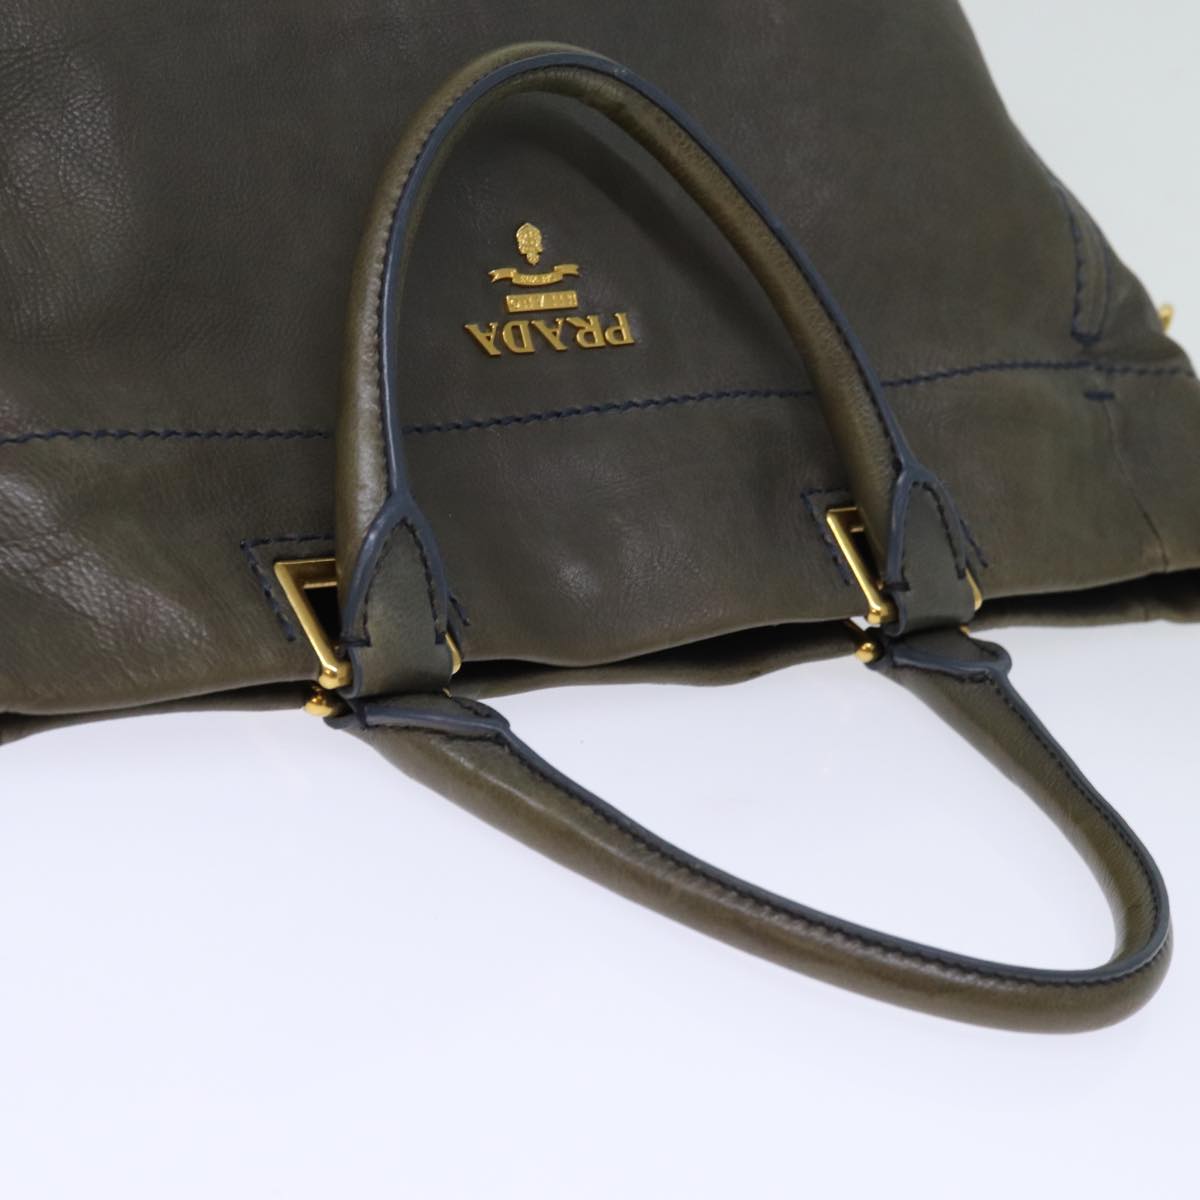 PRADA Hand Bag Leather Gray Auth yk12403